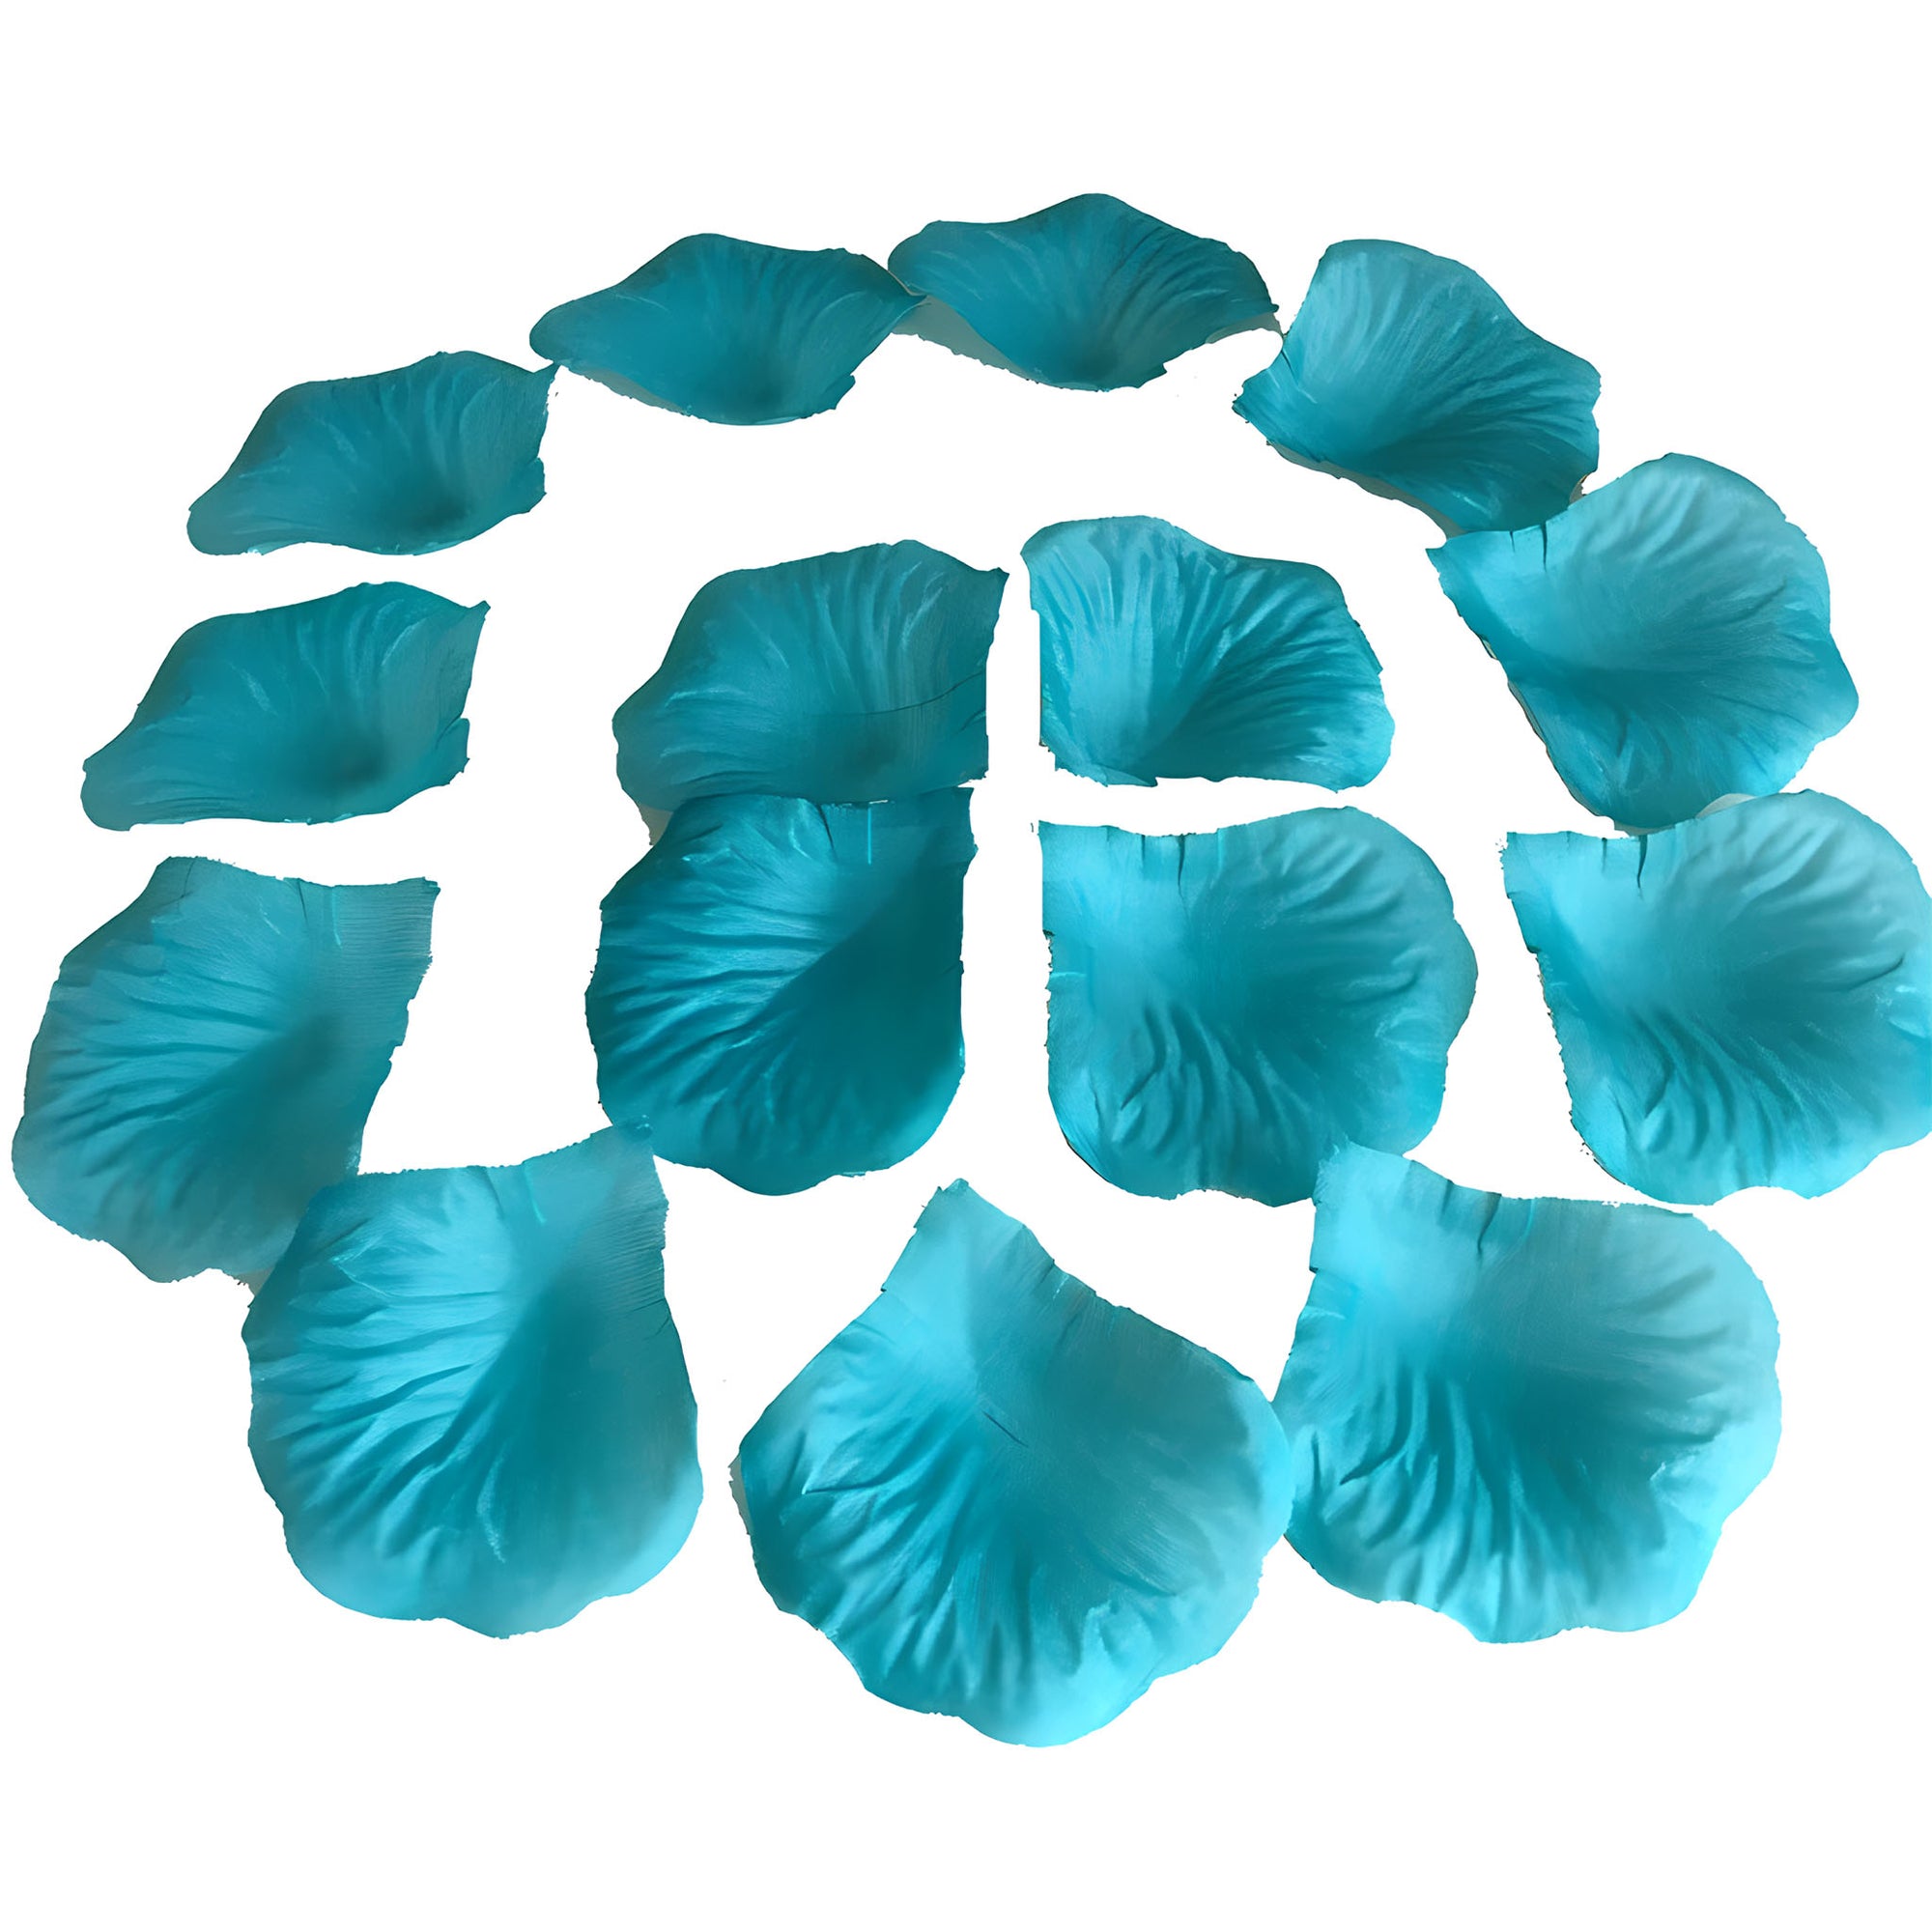 Teal Blue Flower Petals Fake Rose Petals Turquoise 500pcs